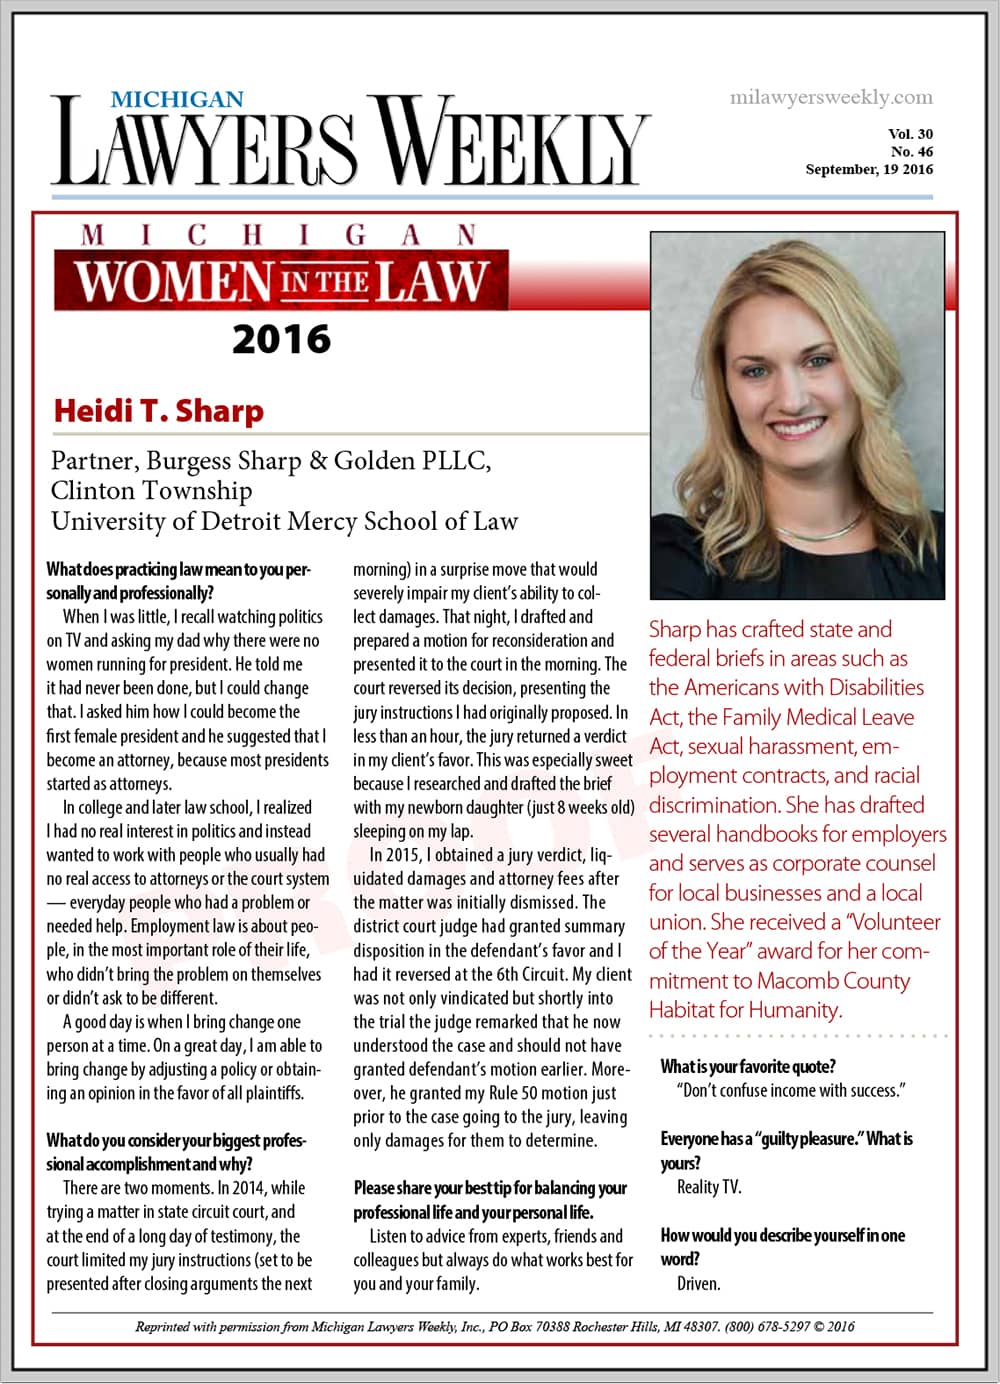 Michigan Women in the Law - Heidi Sharp